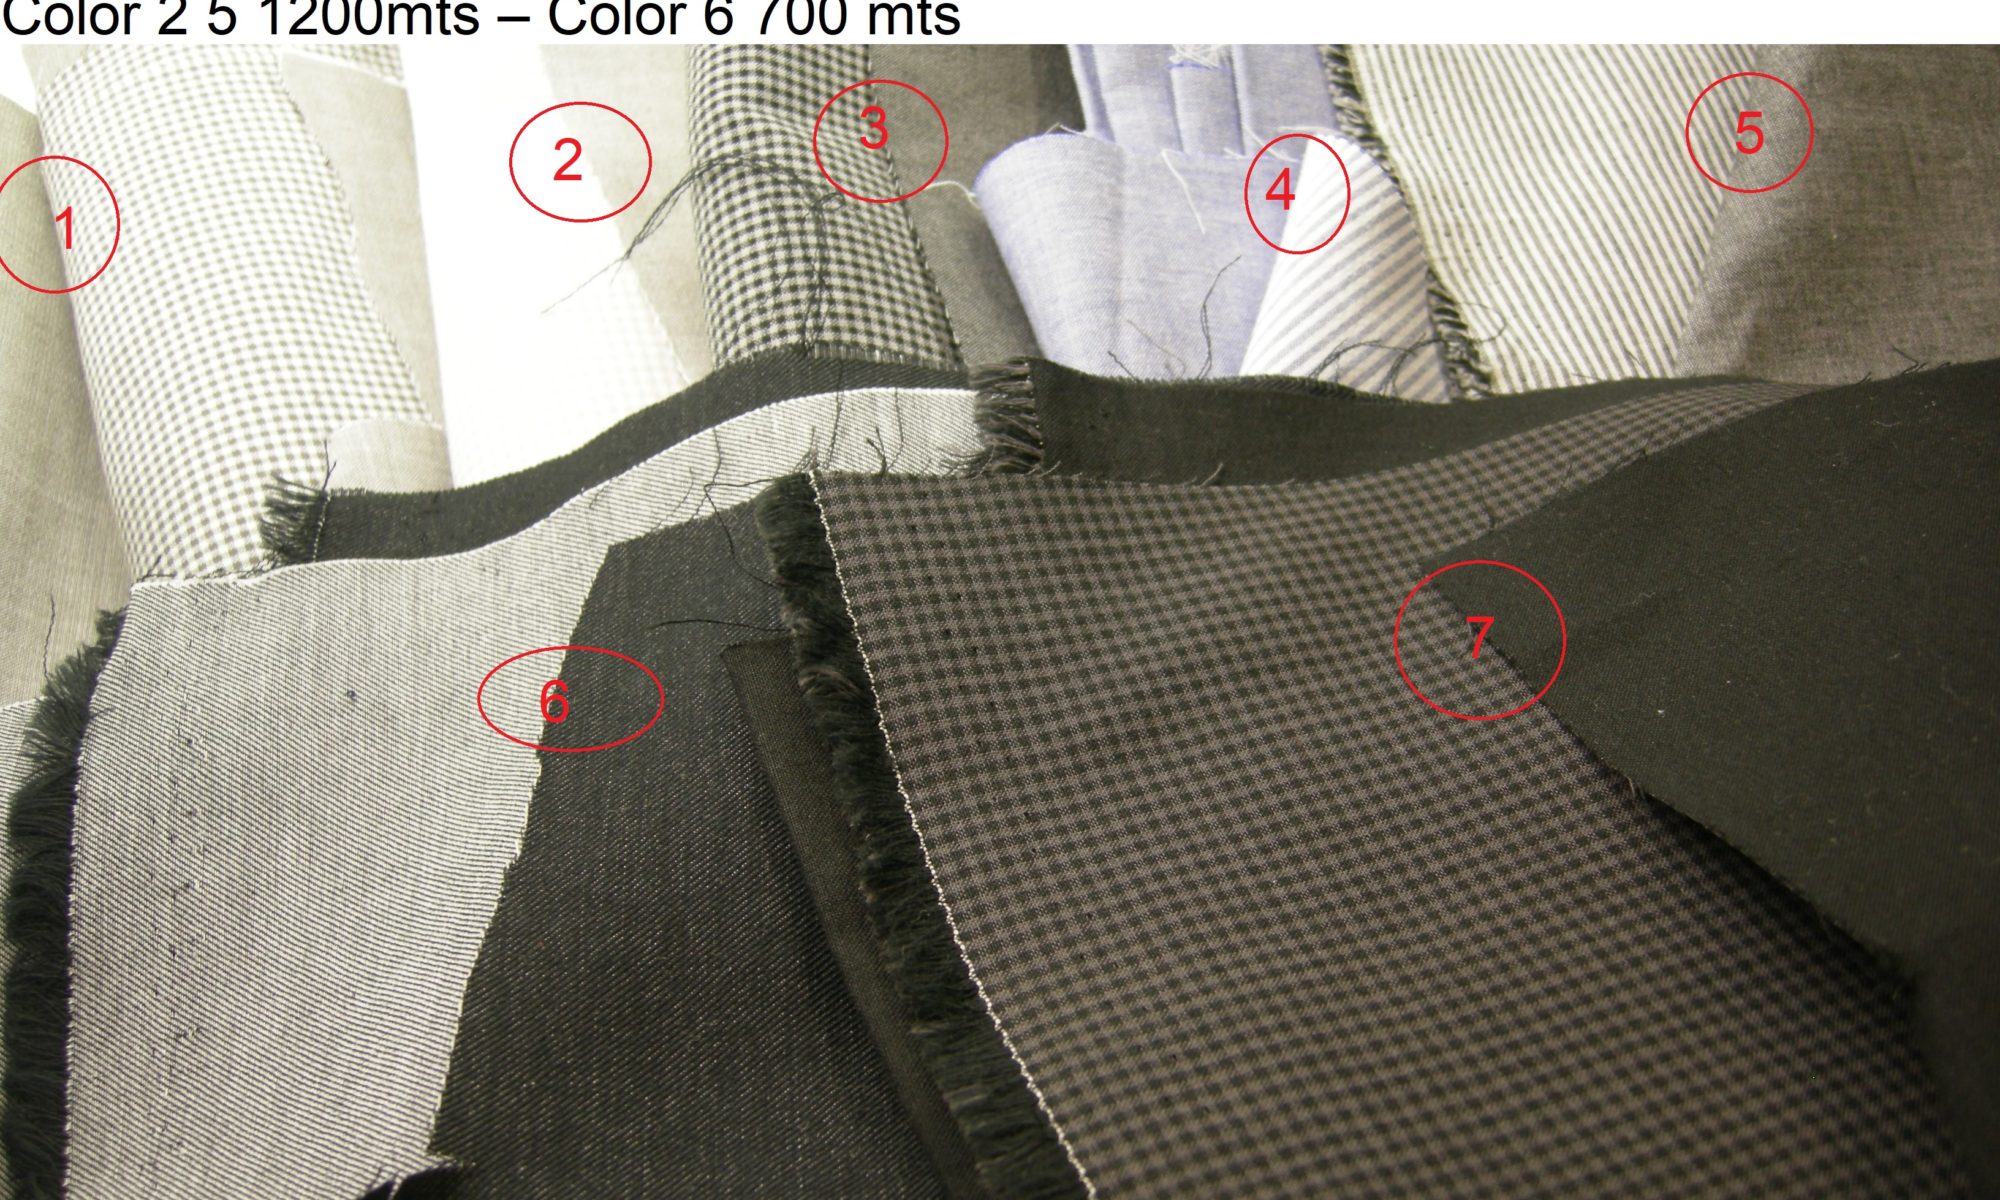 ART 7191 double face cotton jacket fabric WIDTH cm145 WEIGHT gr280 COMPOSITION 99 cotton 1 Nylon polyammide - Color 1 3 4 7 350mts – Color 2 5 1200mts – Color 6 700 mts